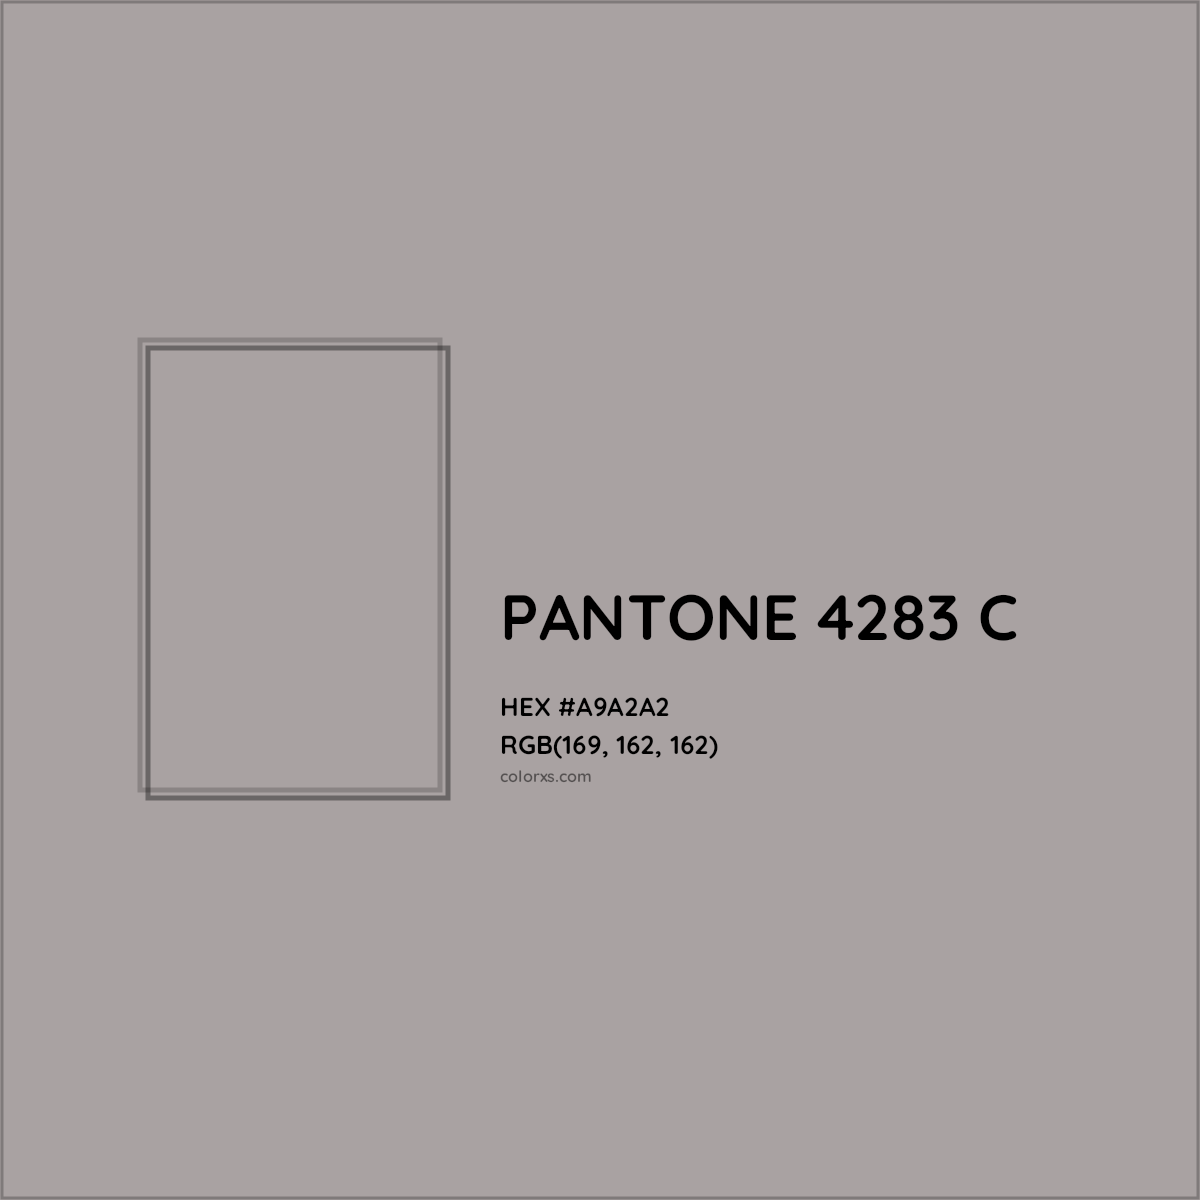 HEX #A9A2A2 PANTONE 4283 C CMS Pantone PMS - Color Code